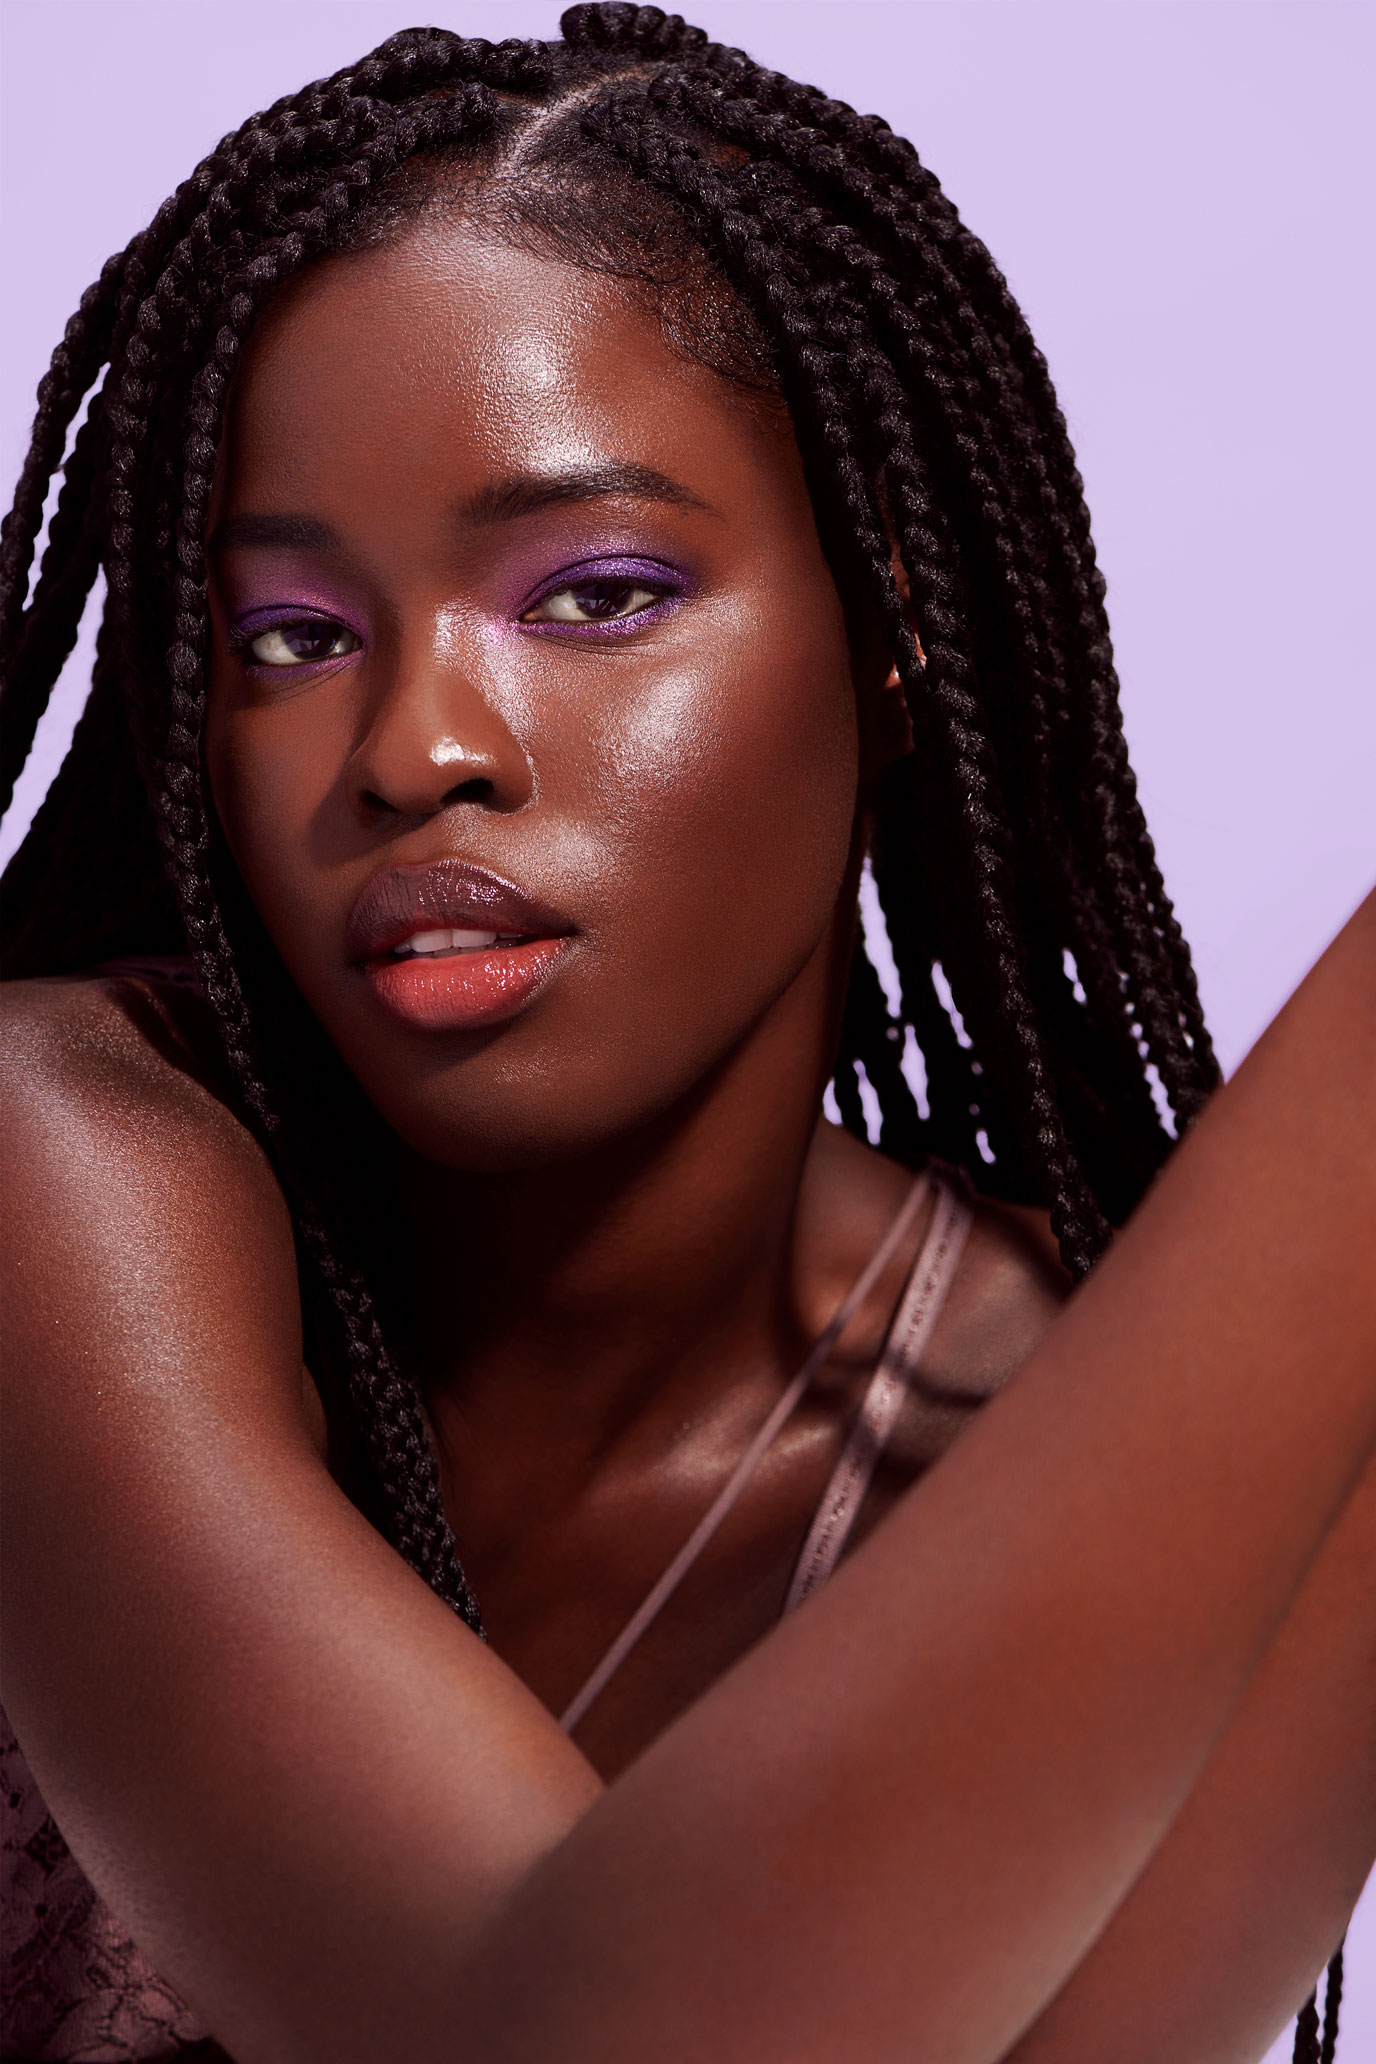 Portrait of Black female model with purple eyeshadow